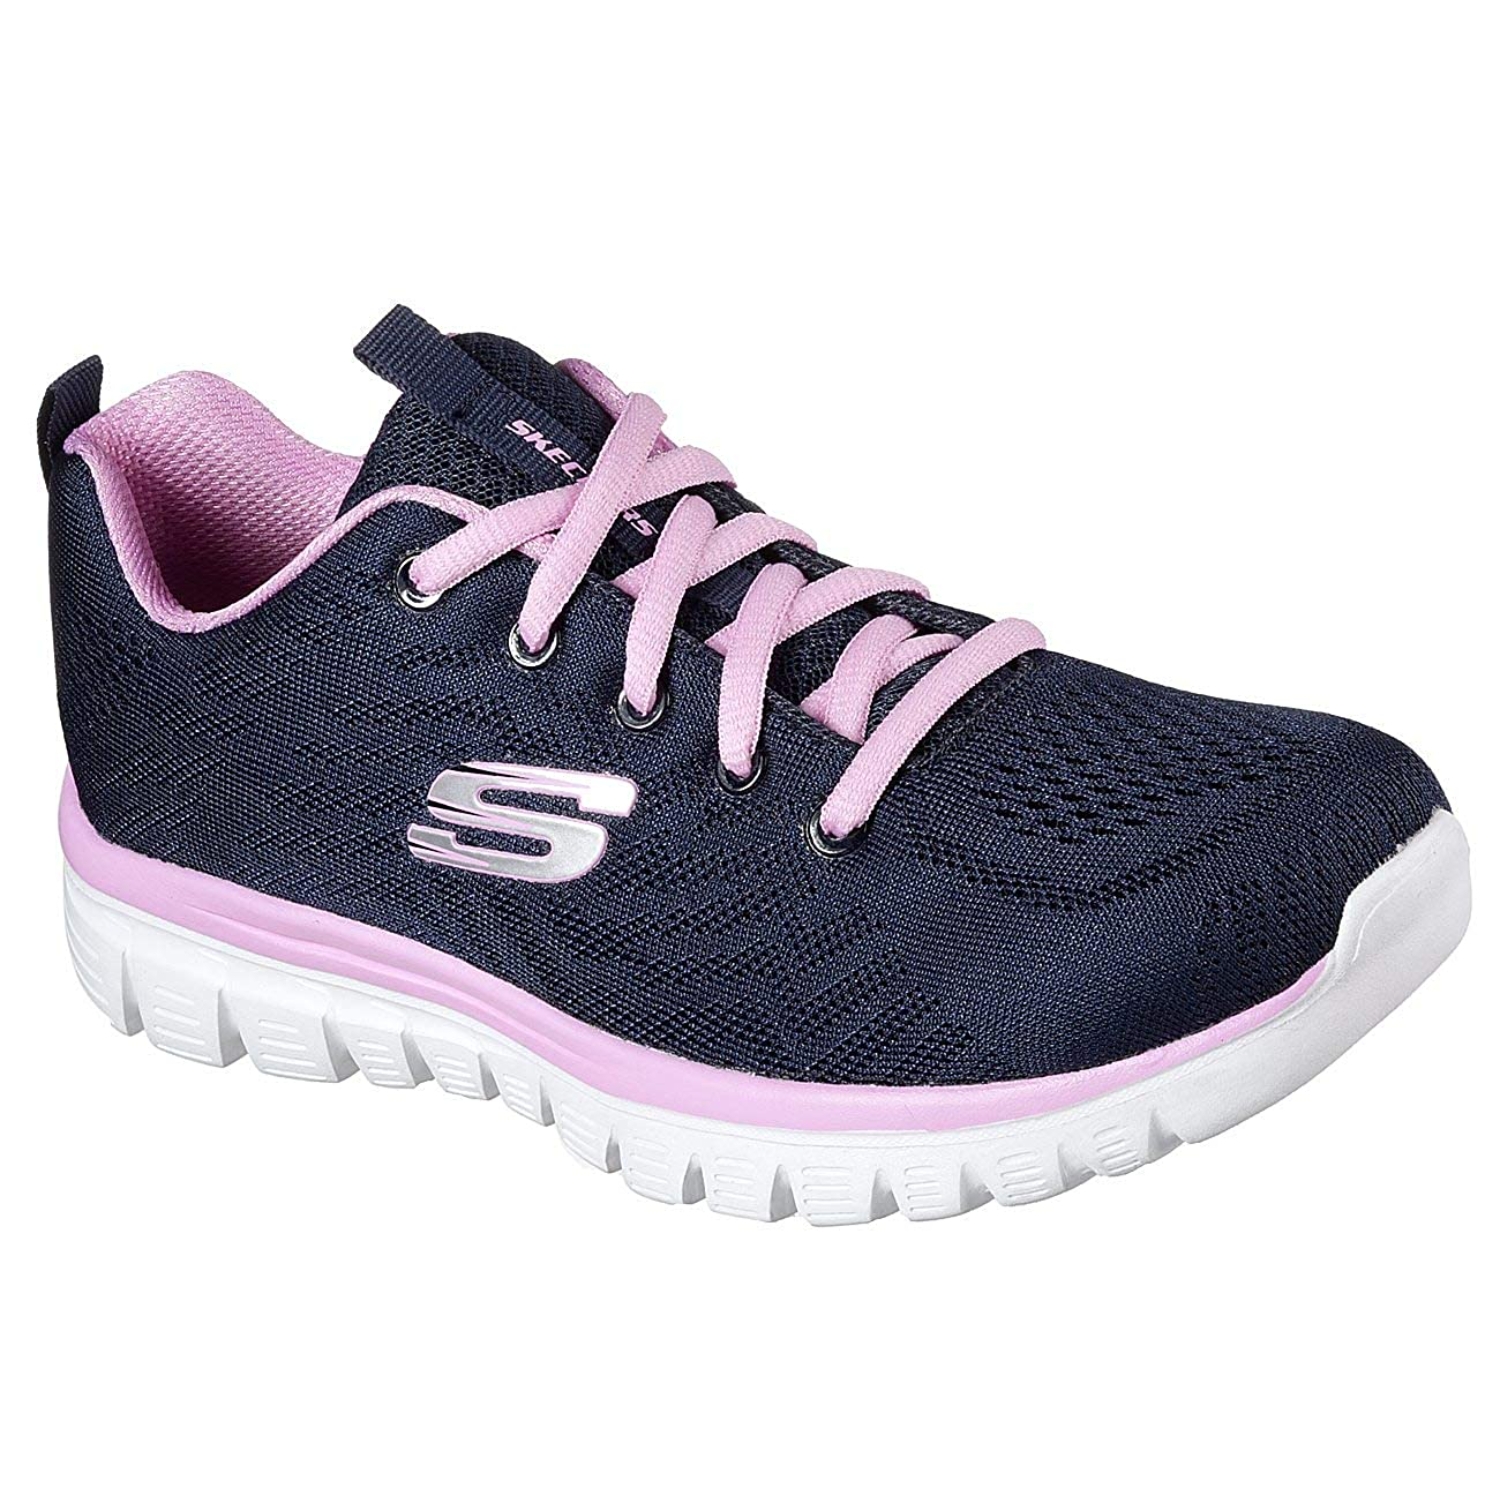 Skechers Women's Graceful-Get Connected Navy/Pink Sports Shoe